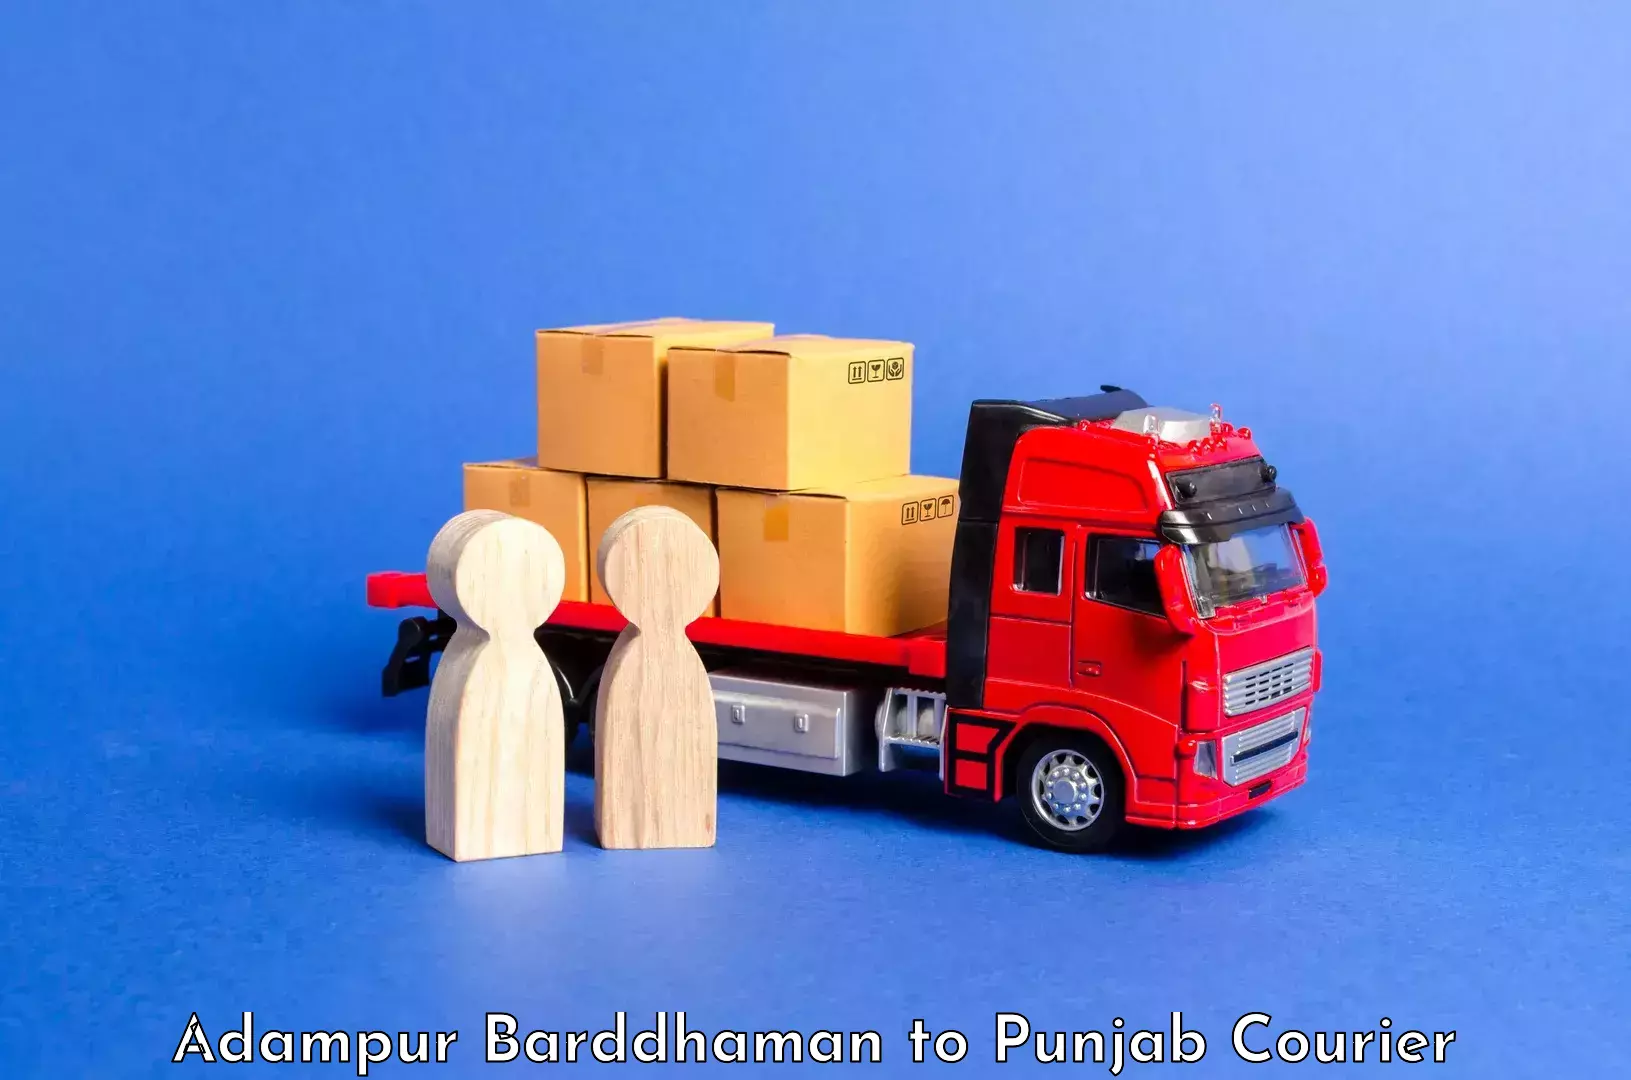 Luggage transfer service Adampur Barddhaman to Punjab